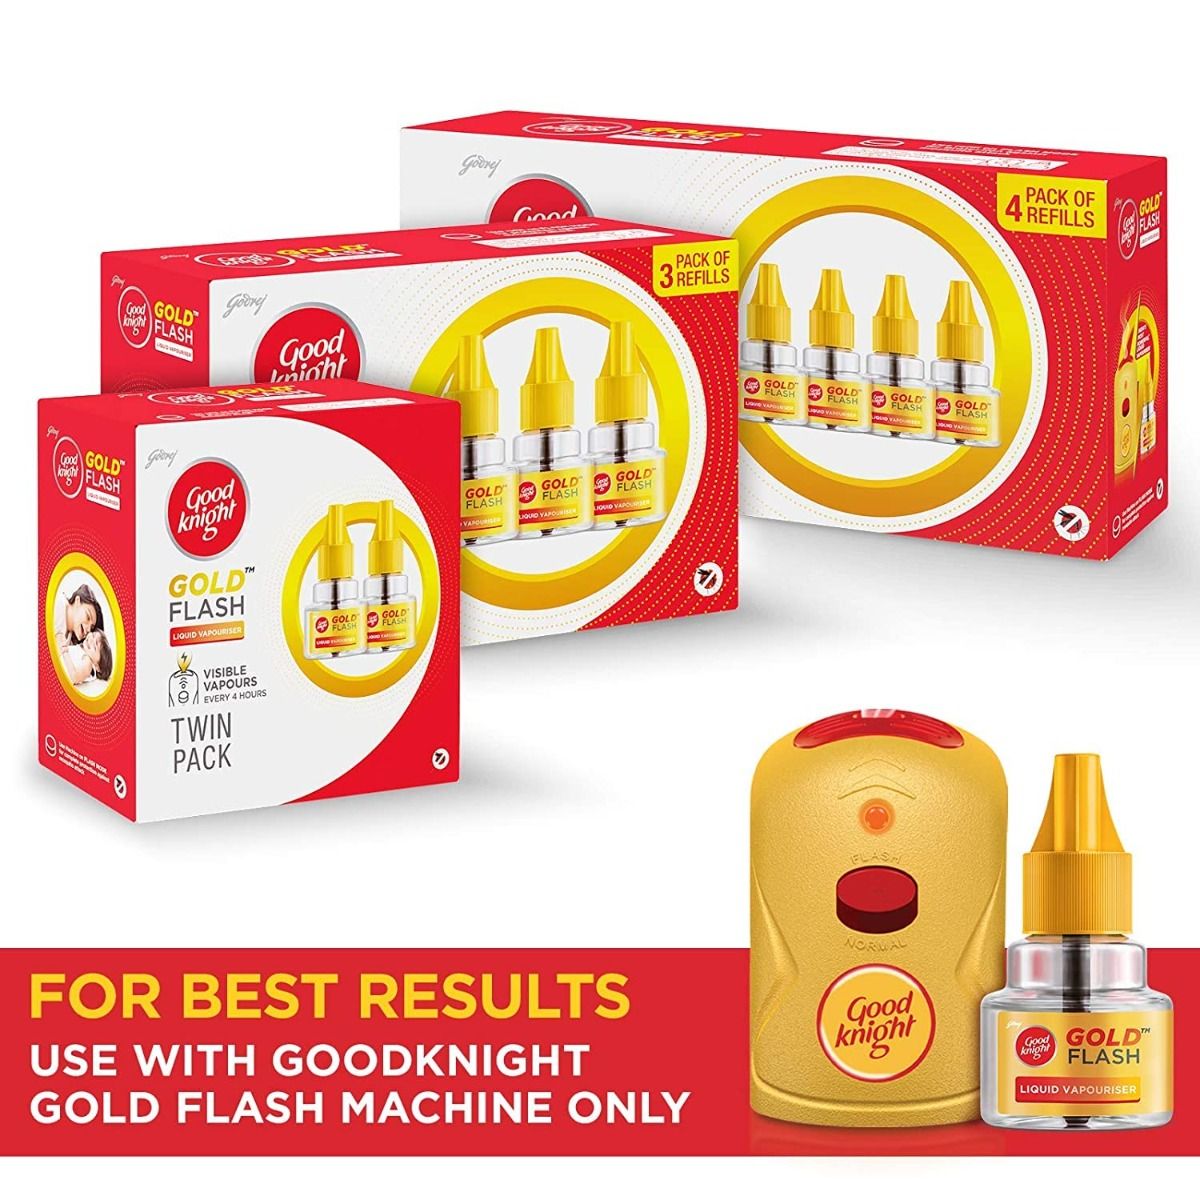 Good Knight Gold Flash Liquid Vapouriser, 90 ml (2x45 ml), Pack of 1 